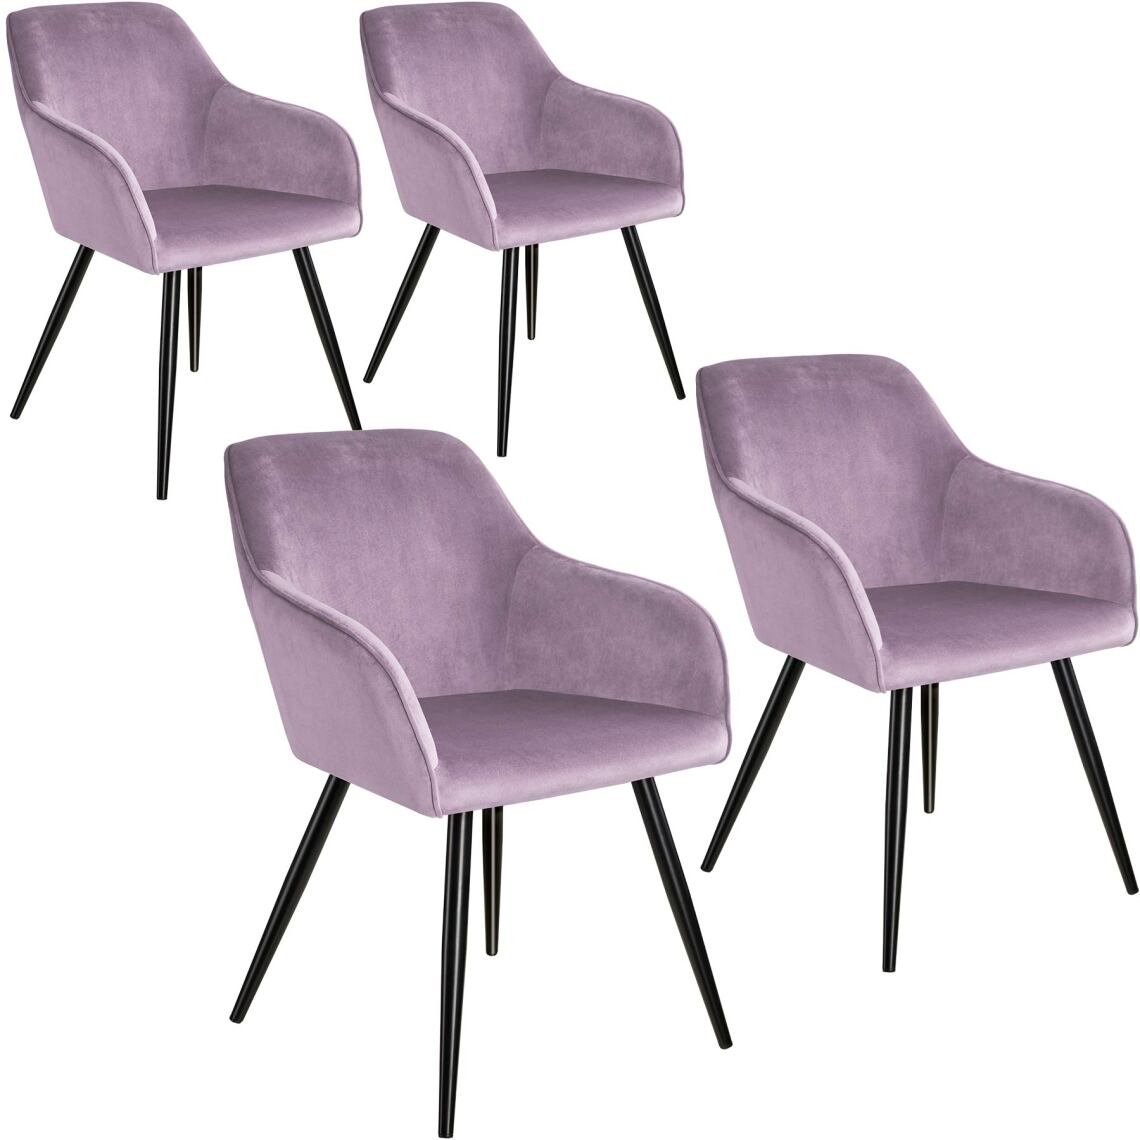 Tectake - 4 Chaises MARILYN Design en Velours Style Scandinave - violet clair/noir - Chaises